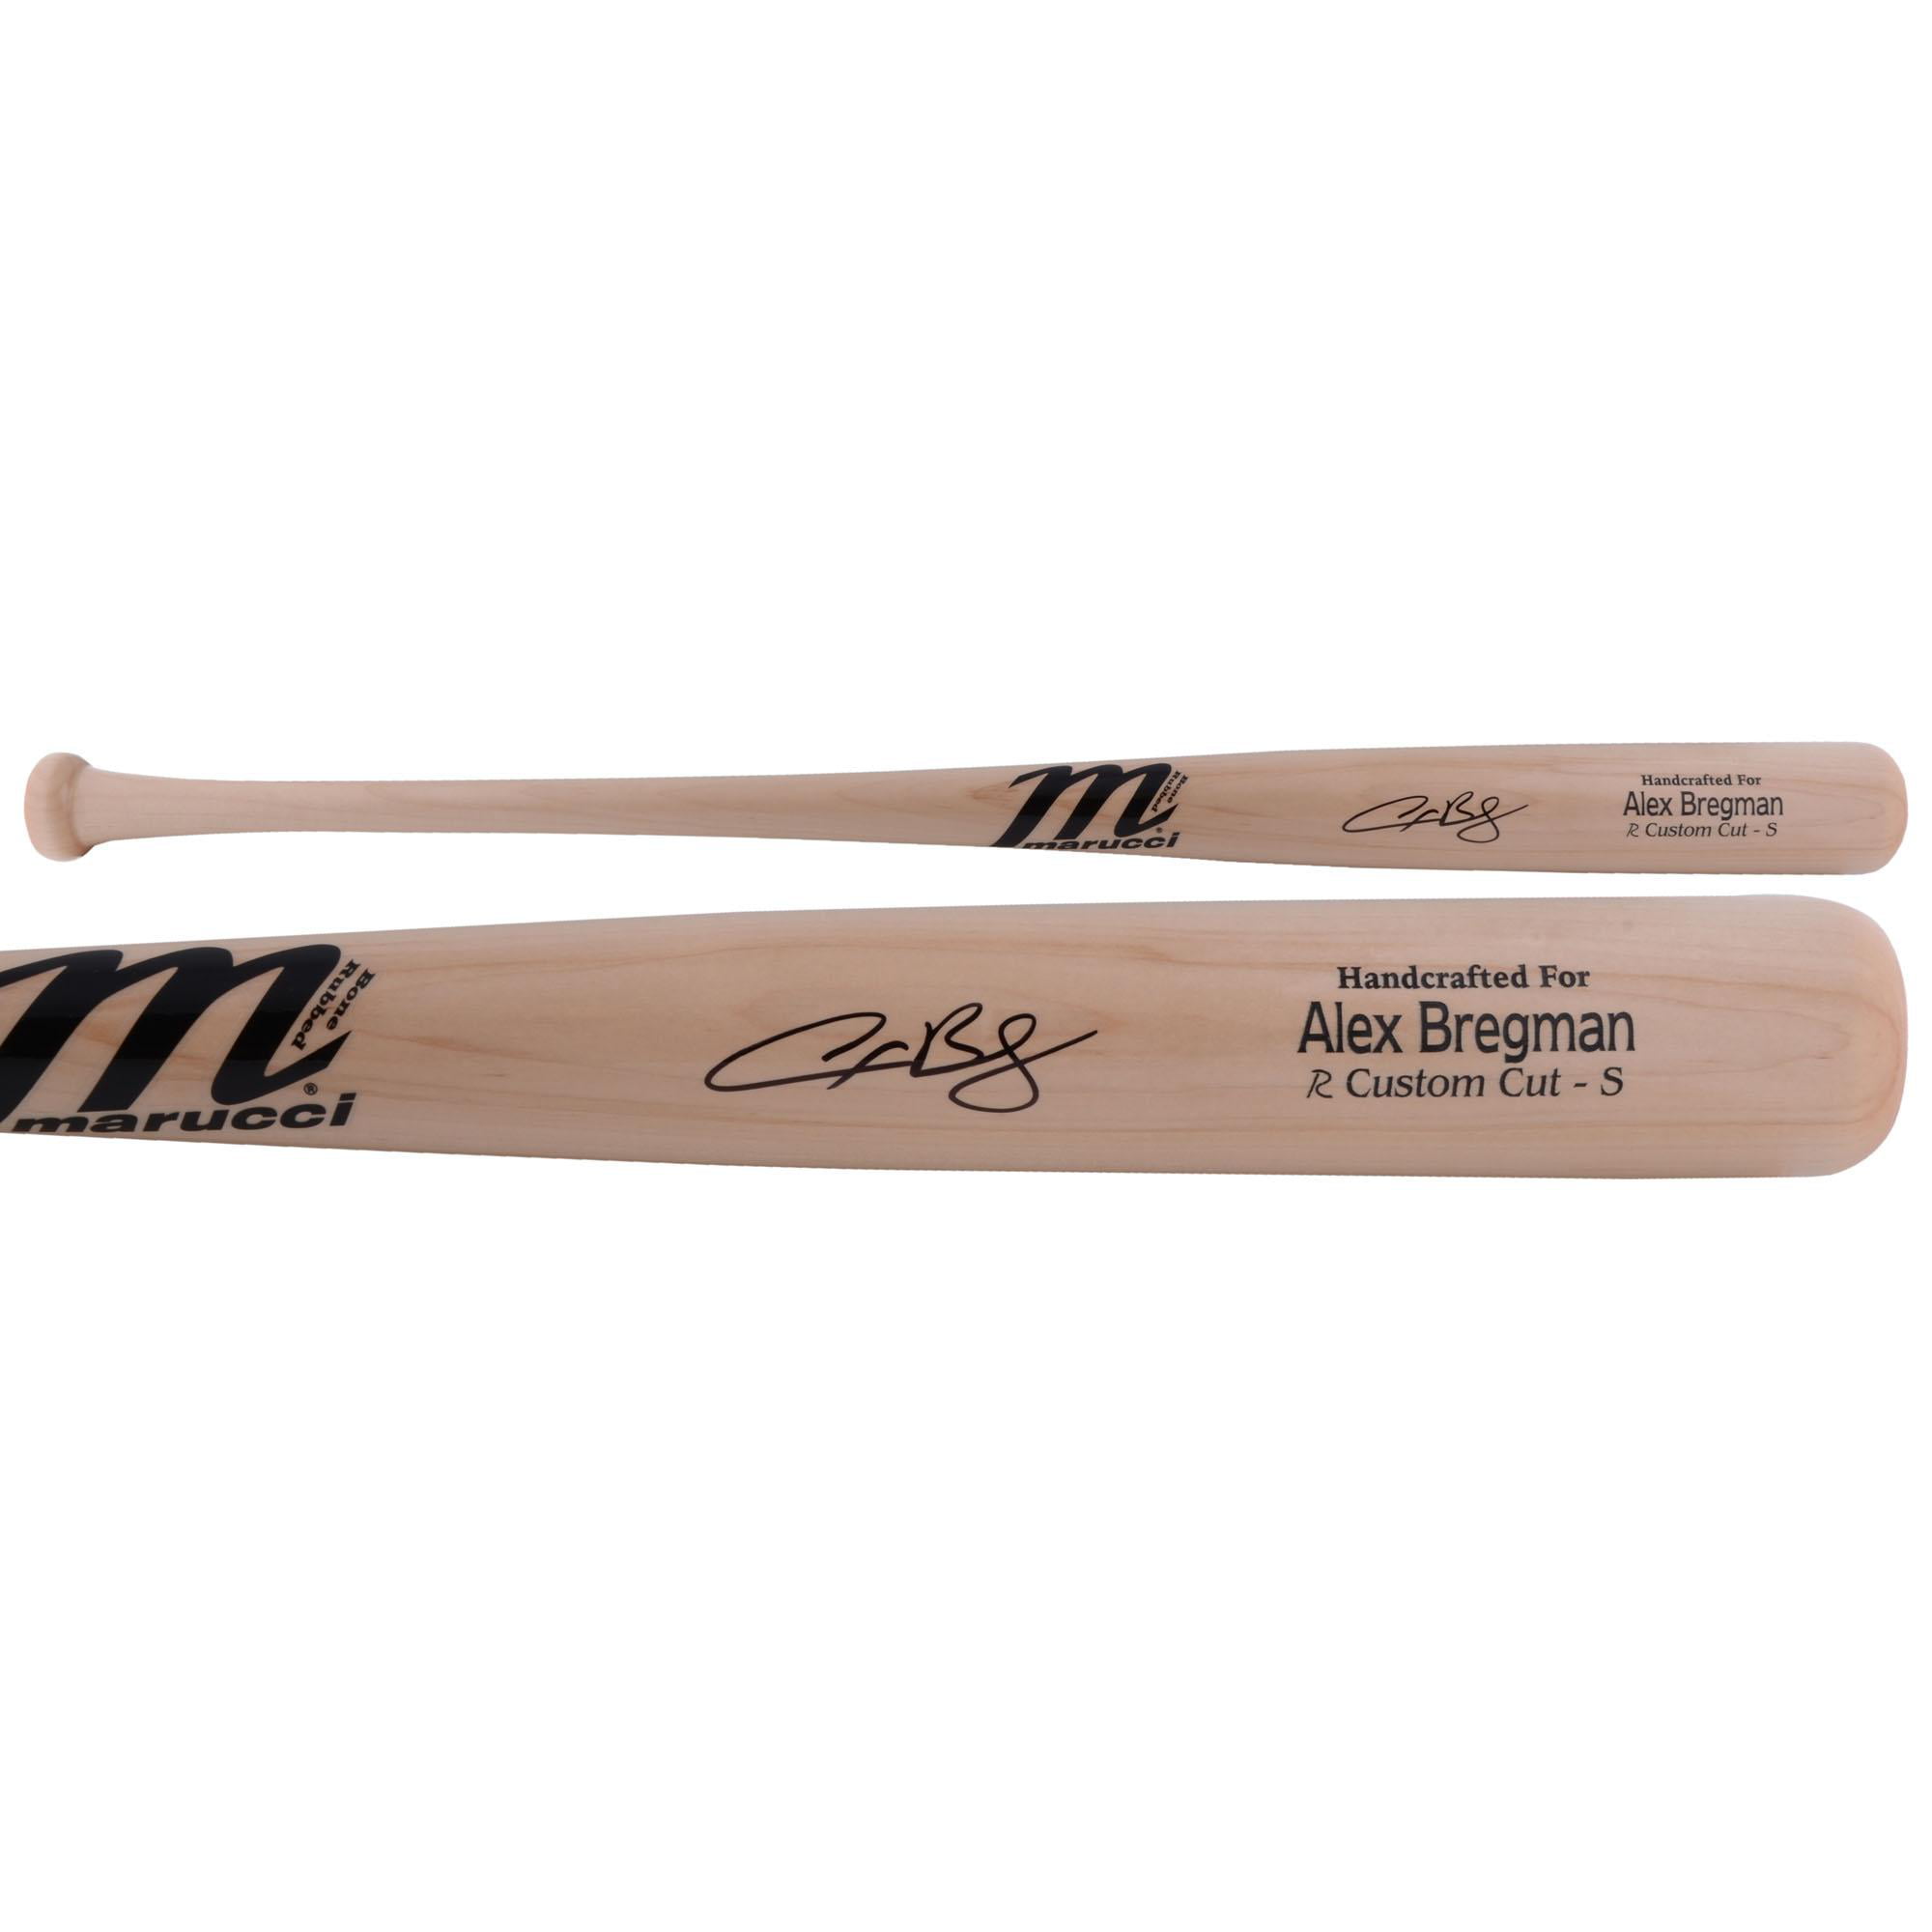 alex bregman autographed bat